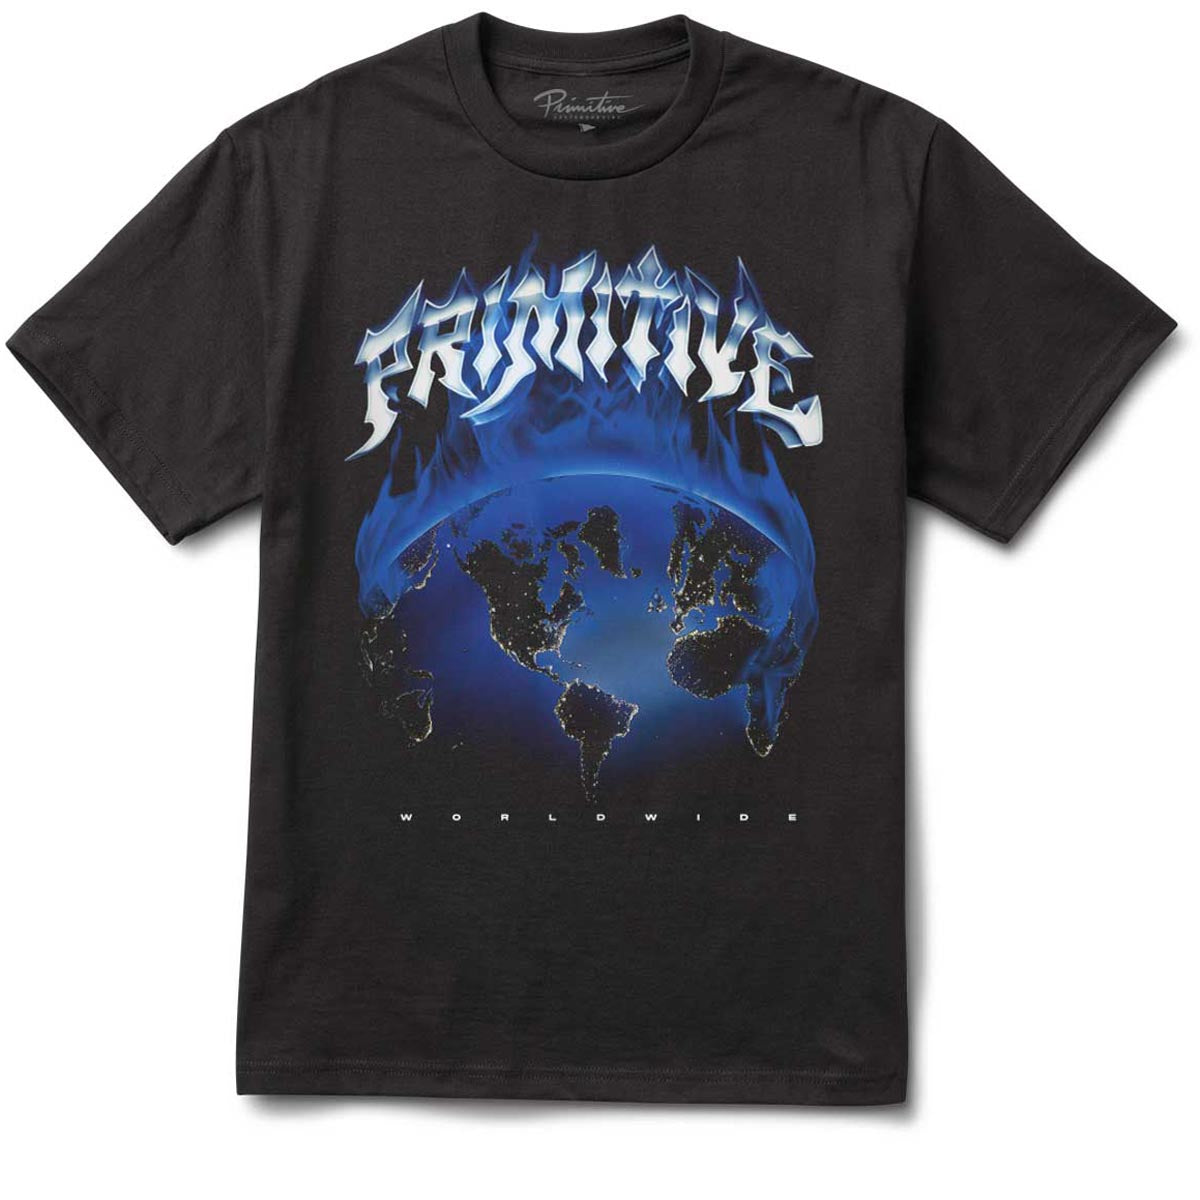 Primitive Breakdown T-Shirt - Black image 1